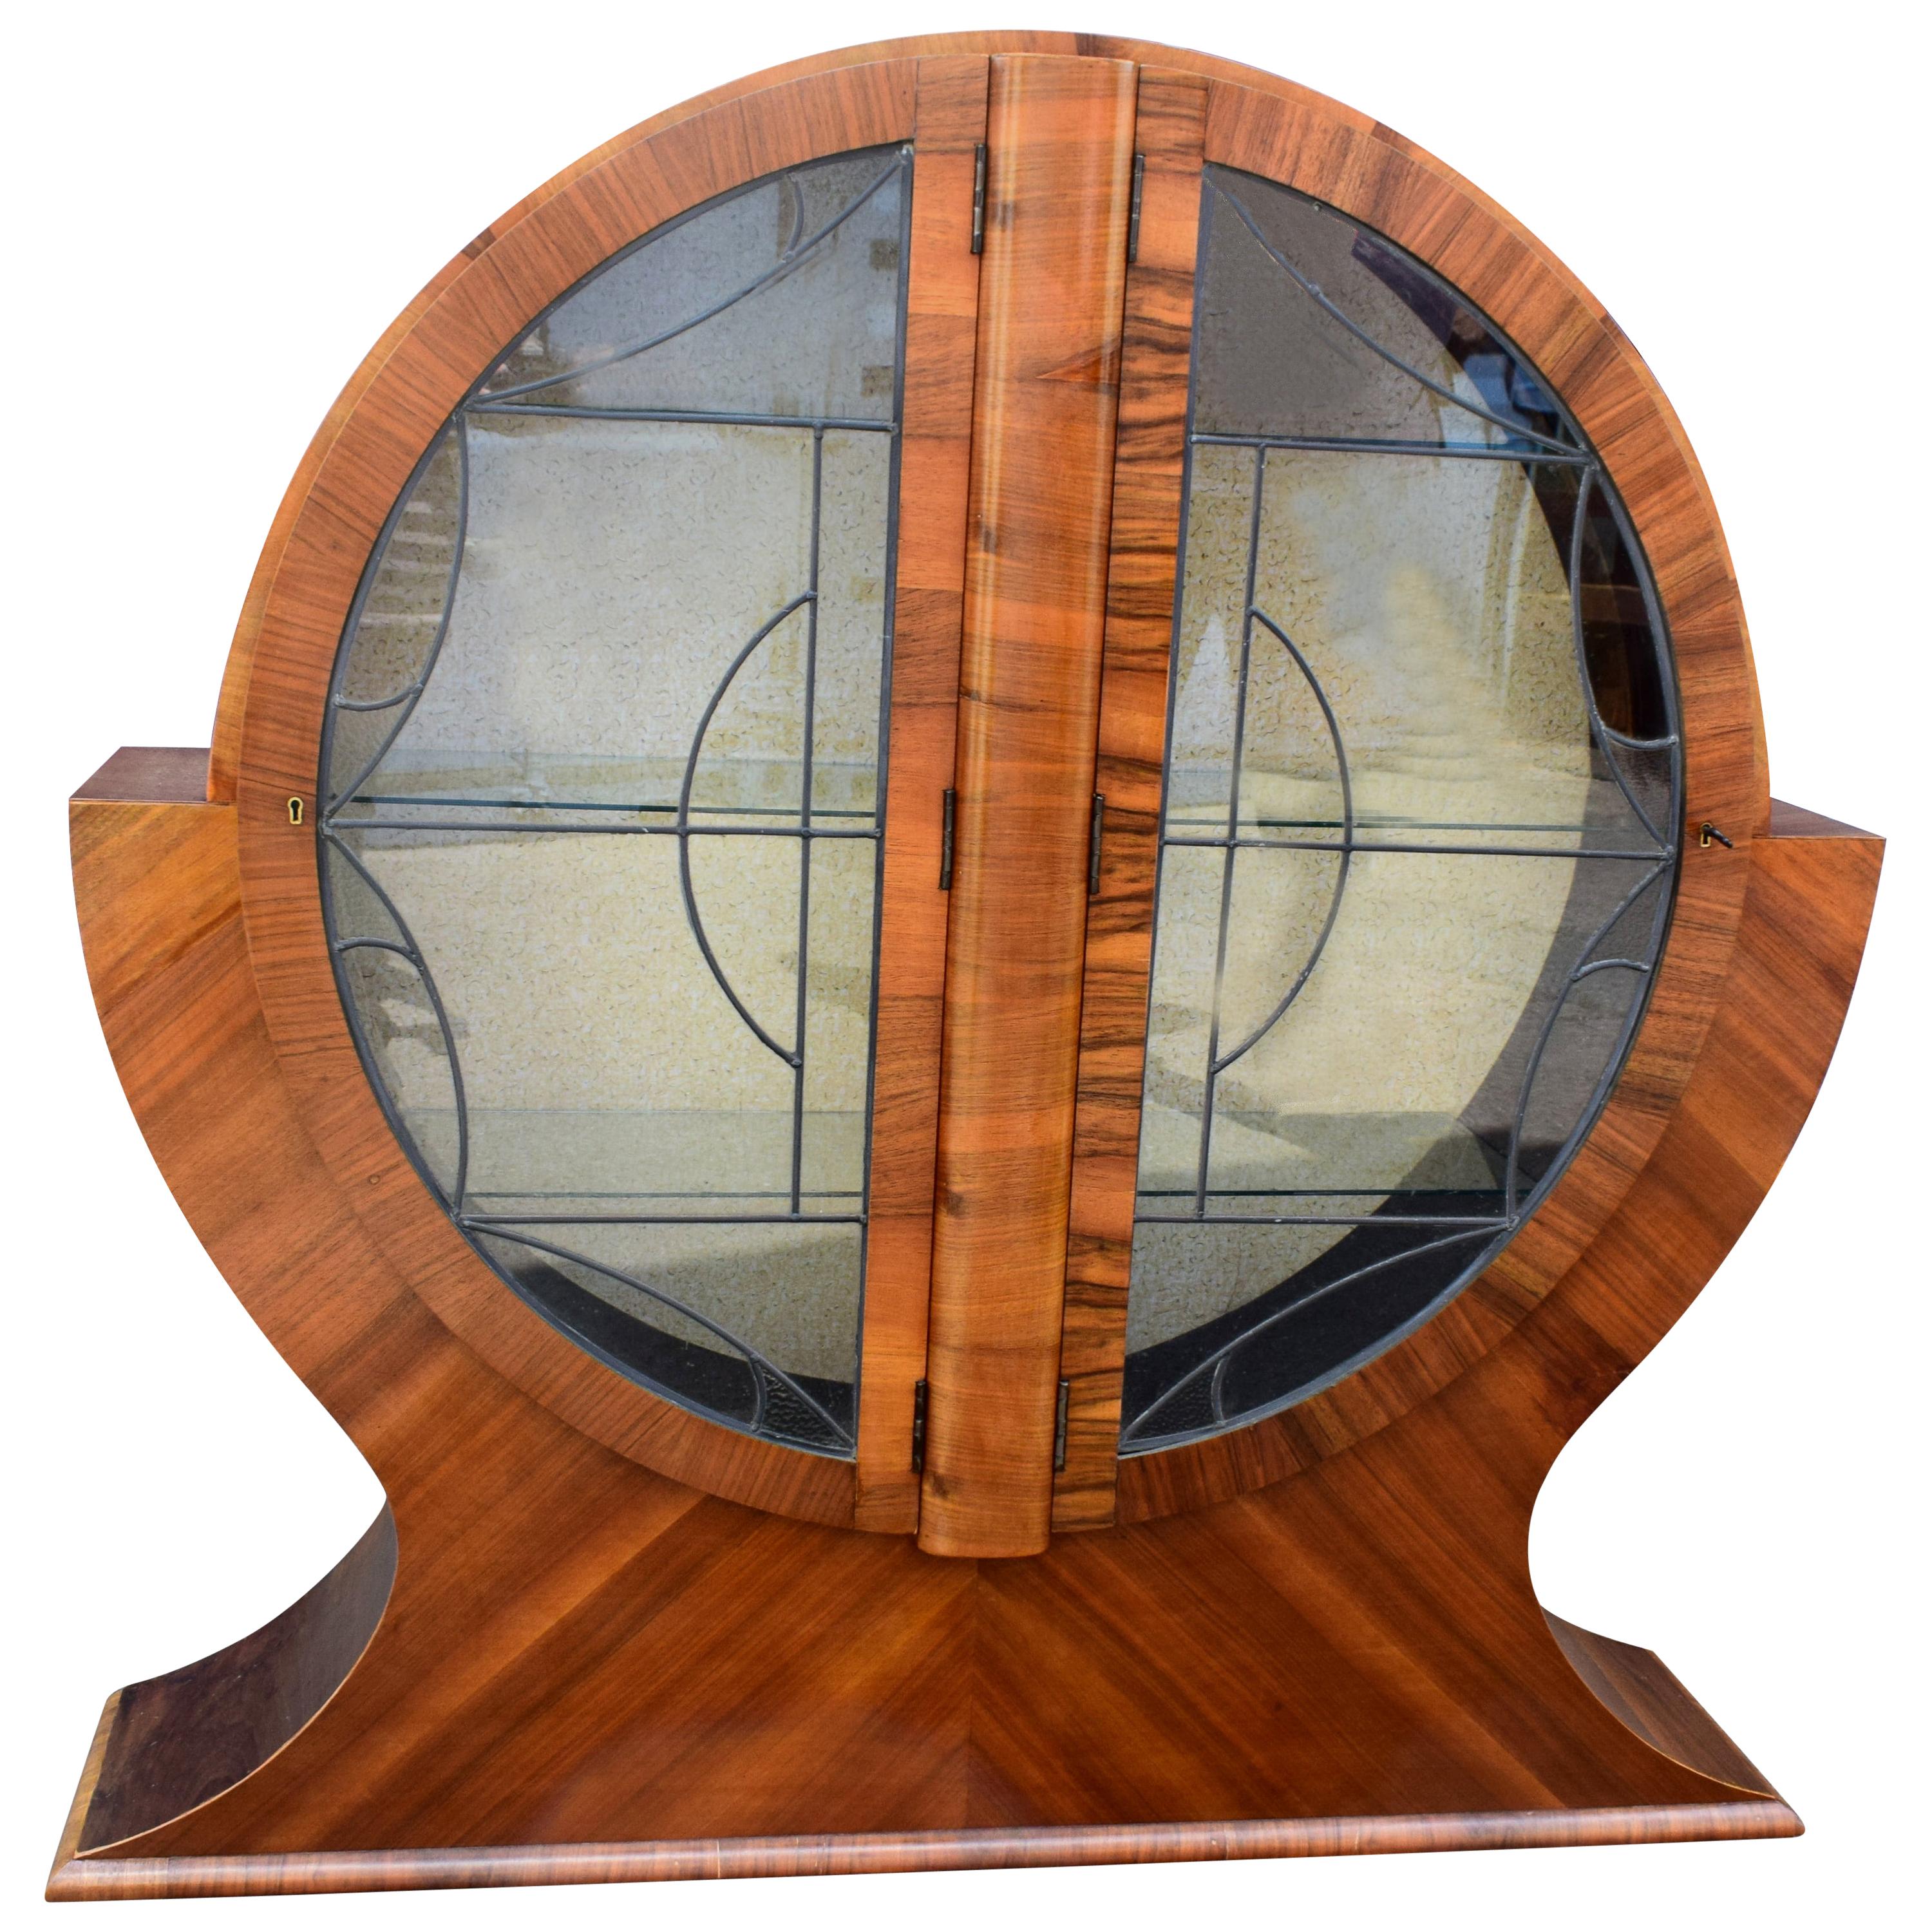 Art Deco Circular Display Vitrine Cabinet in Walnut, 1930s English